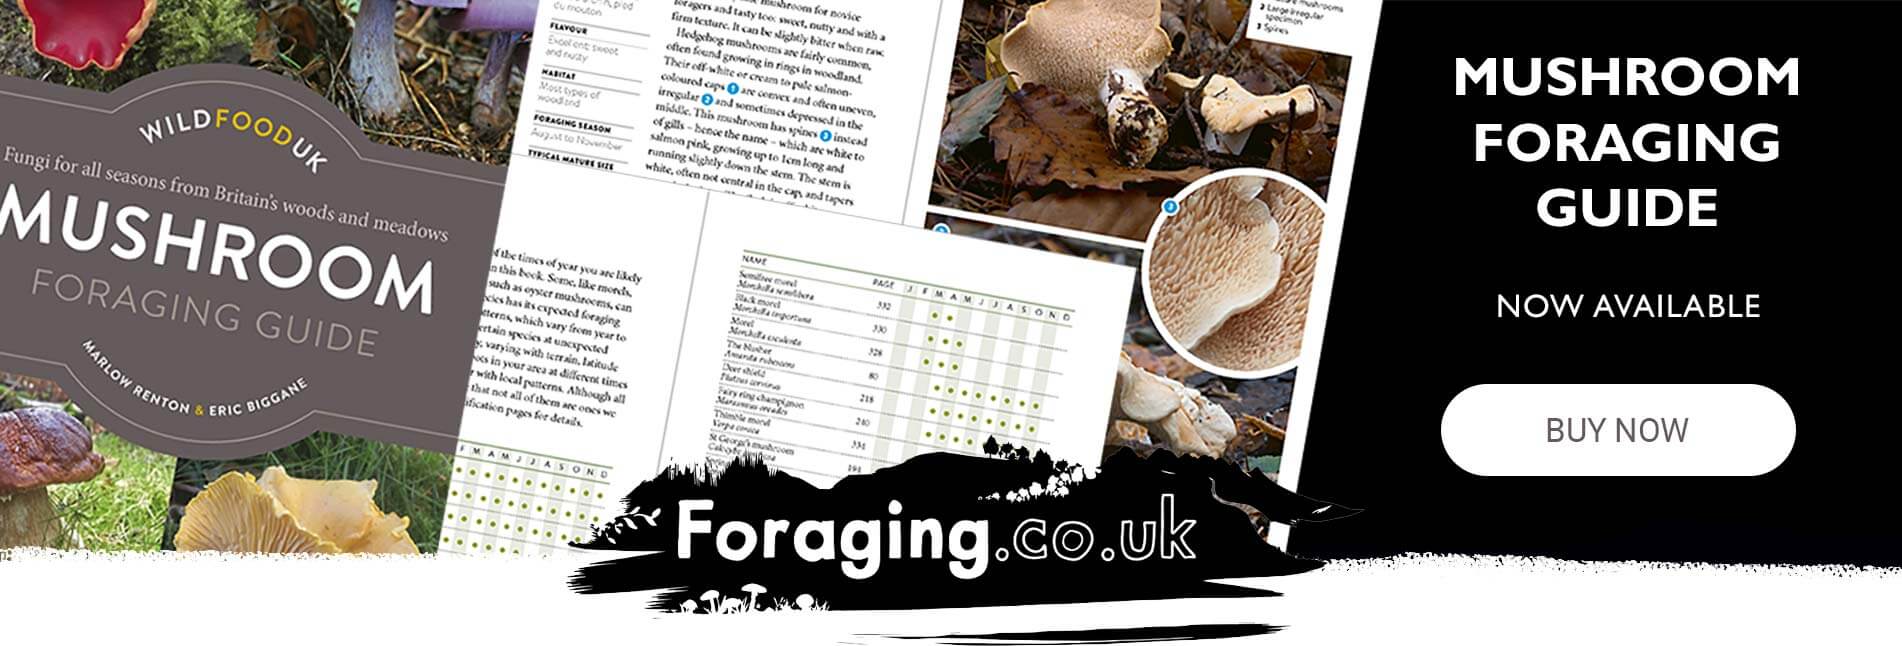 The Wild Food UK Mushroom Foraging Guide - Buy now